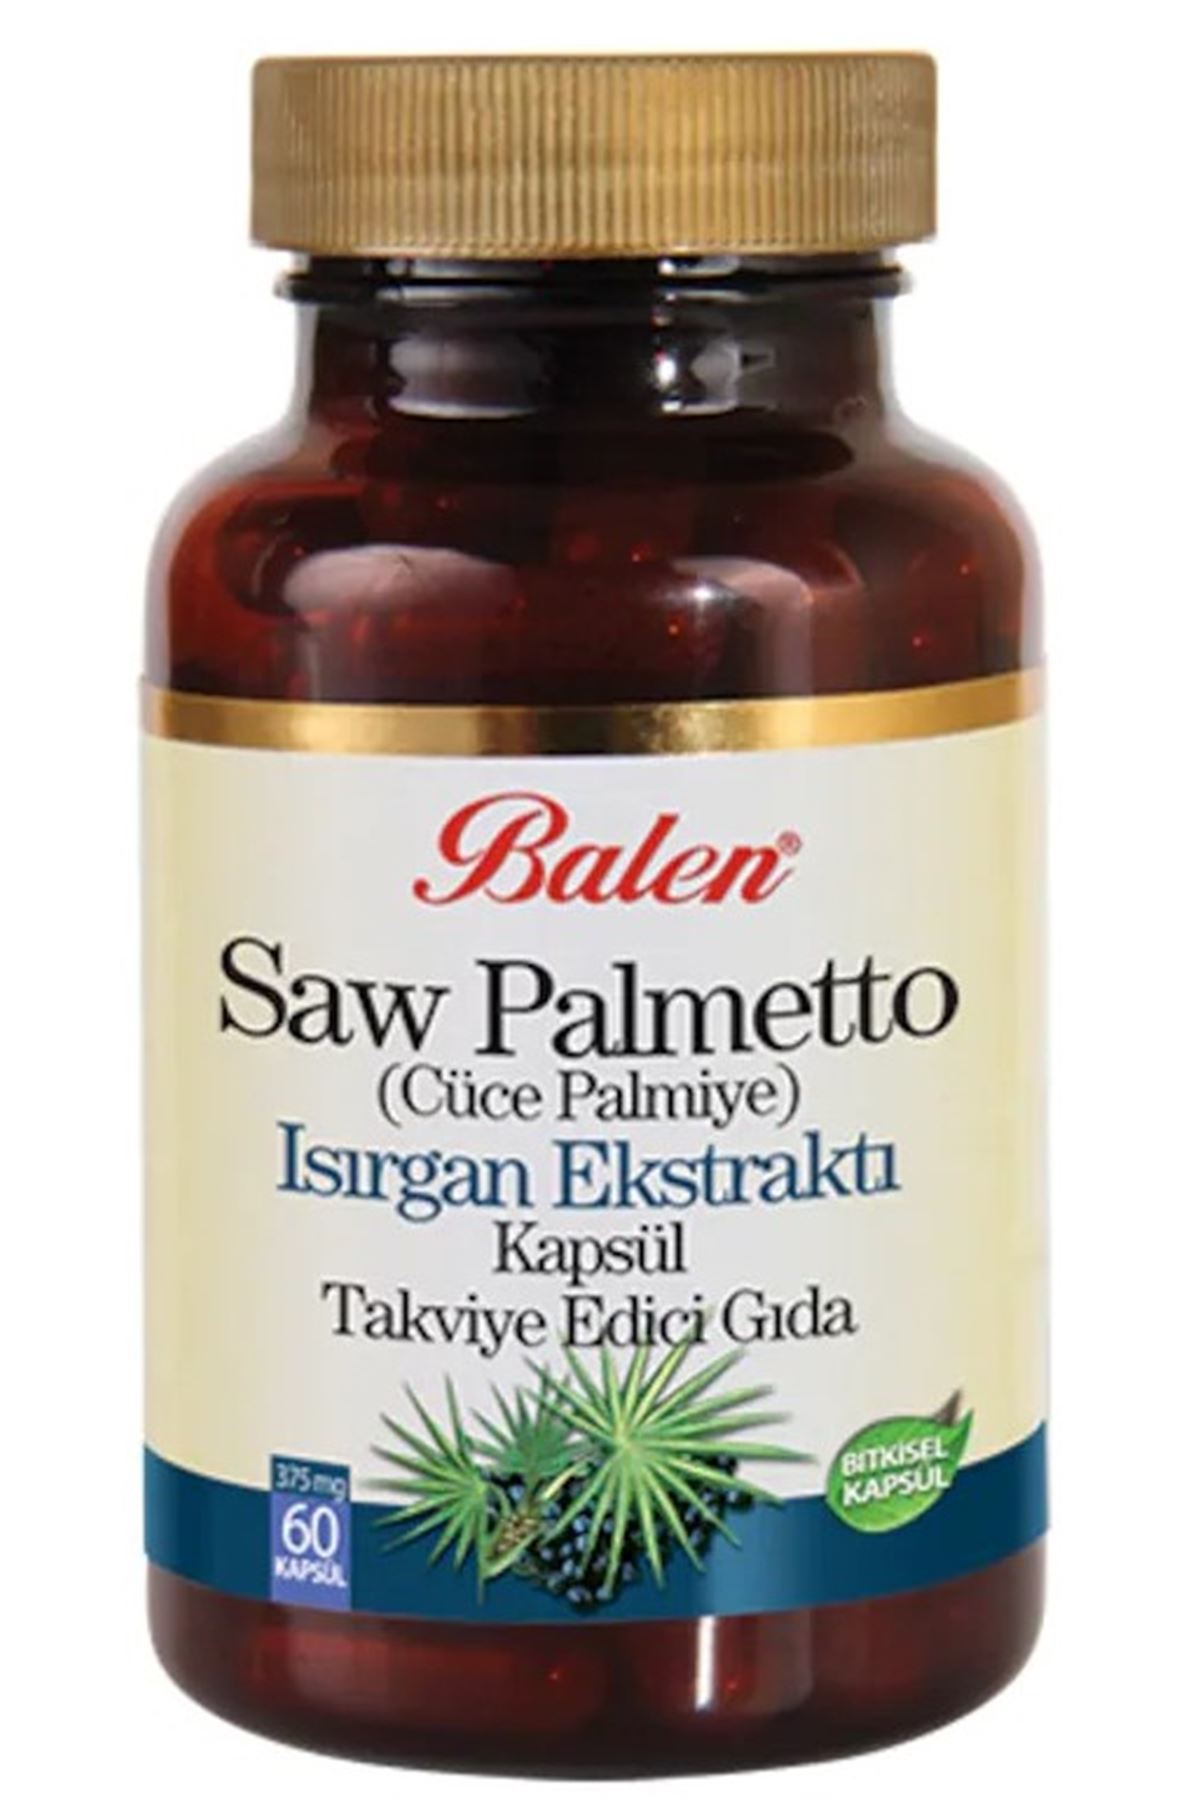 Saw Palmetto (Cüce Palmiye) Isırgan Ekstraktı 375 mg 60 Kapsul